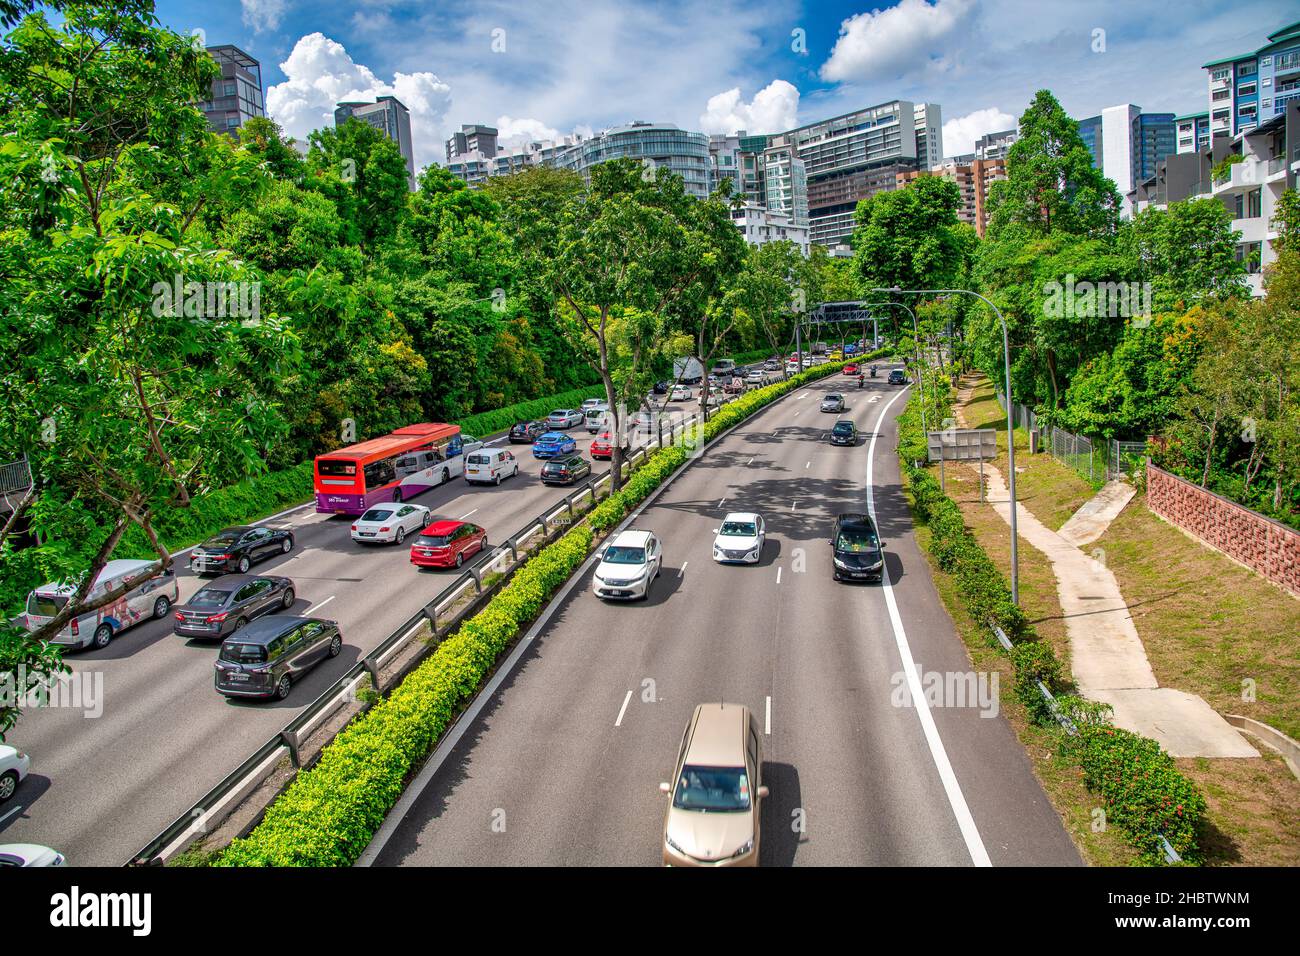 SINGAPORE - DECEMBER 31ST, 2019: Car traffic along a major city road Stock Photo